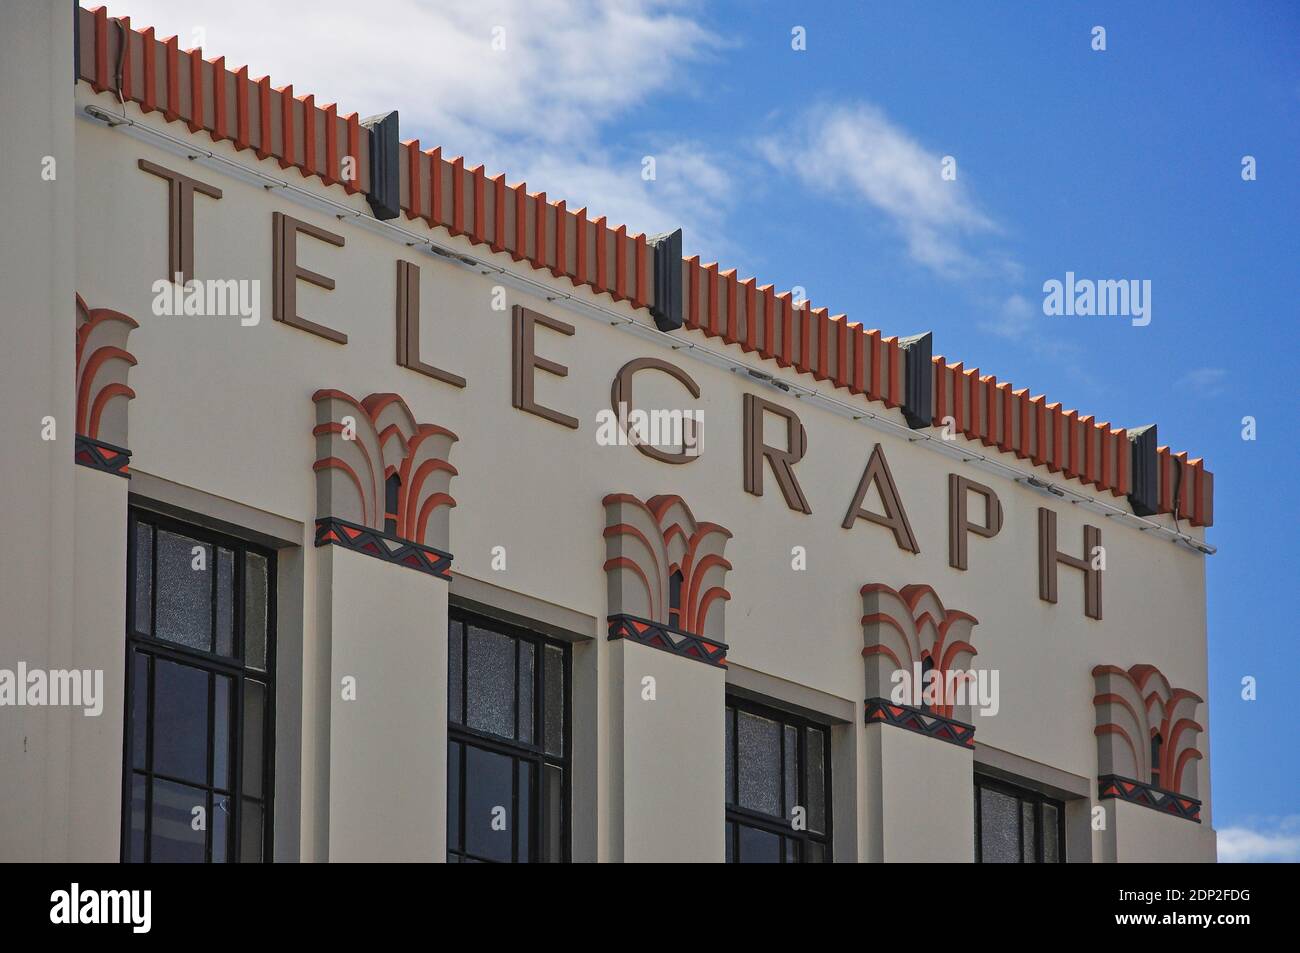 Der Daily Telegraph Gebäudefassade, Tennyson Street, Napier, Hawkes Bay, North Island, Neuseeland Stockfoto